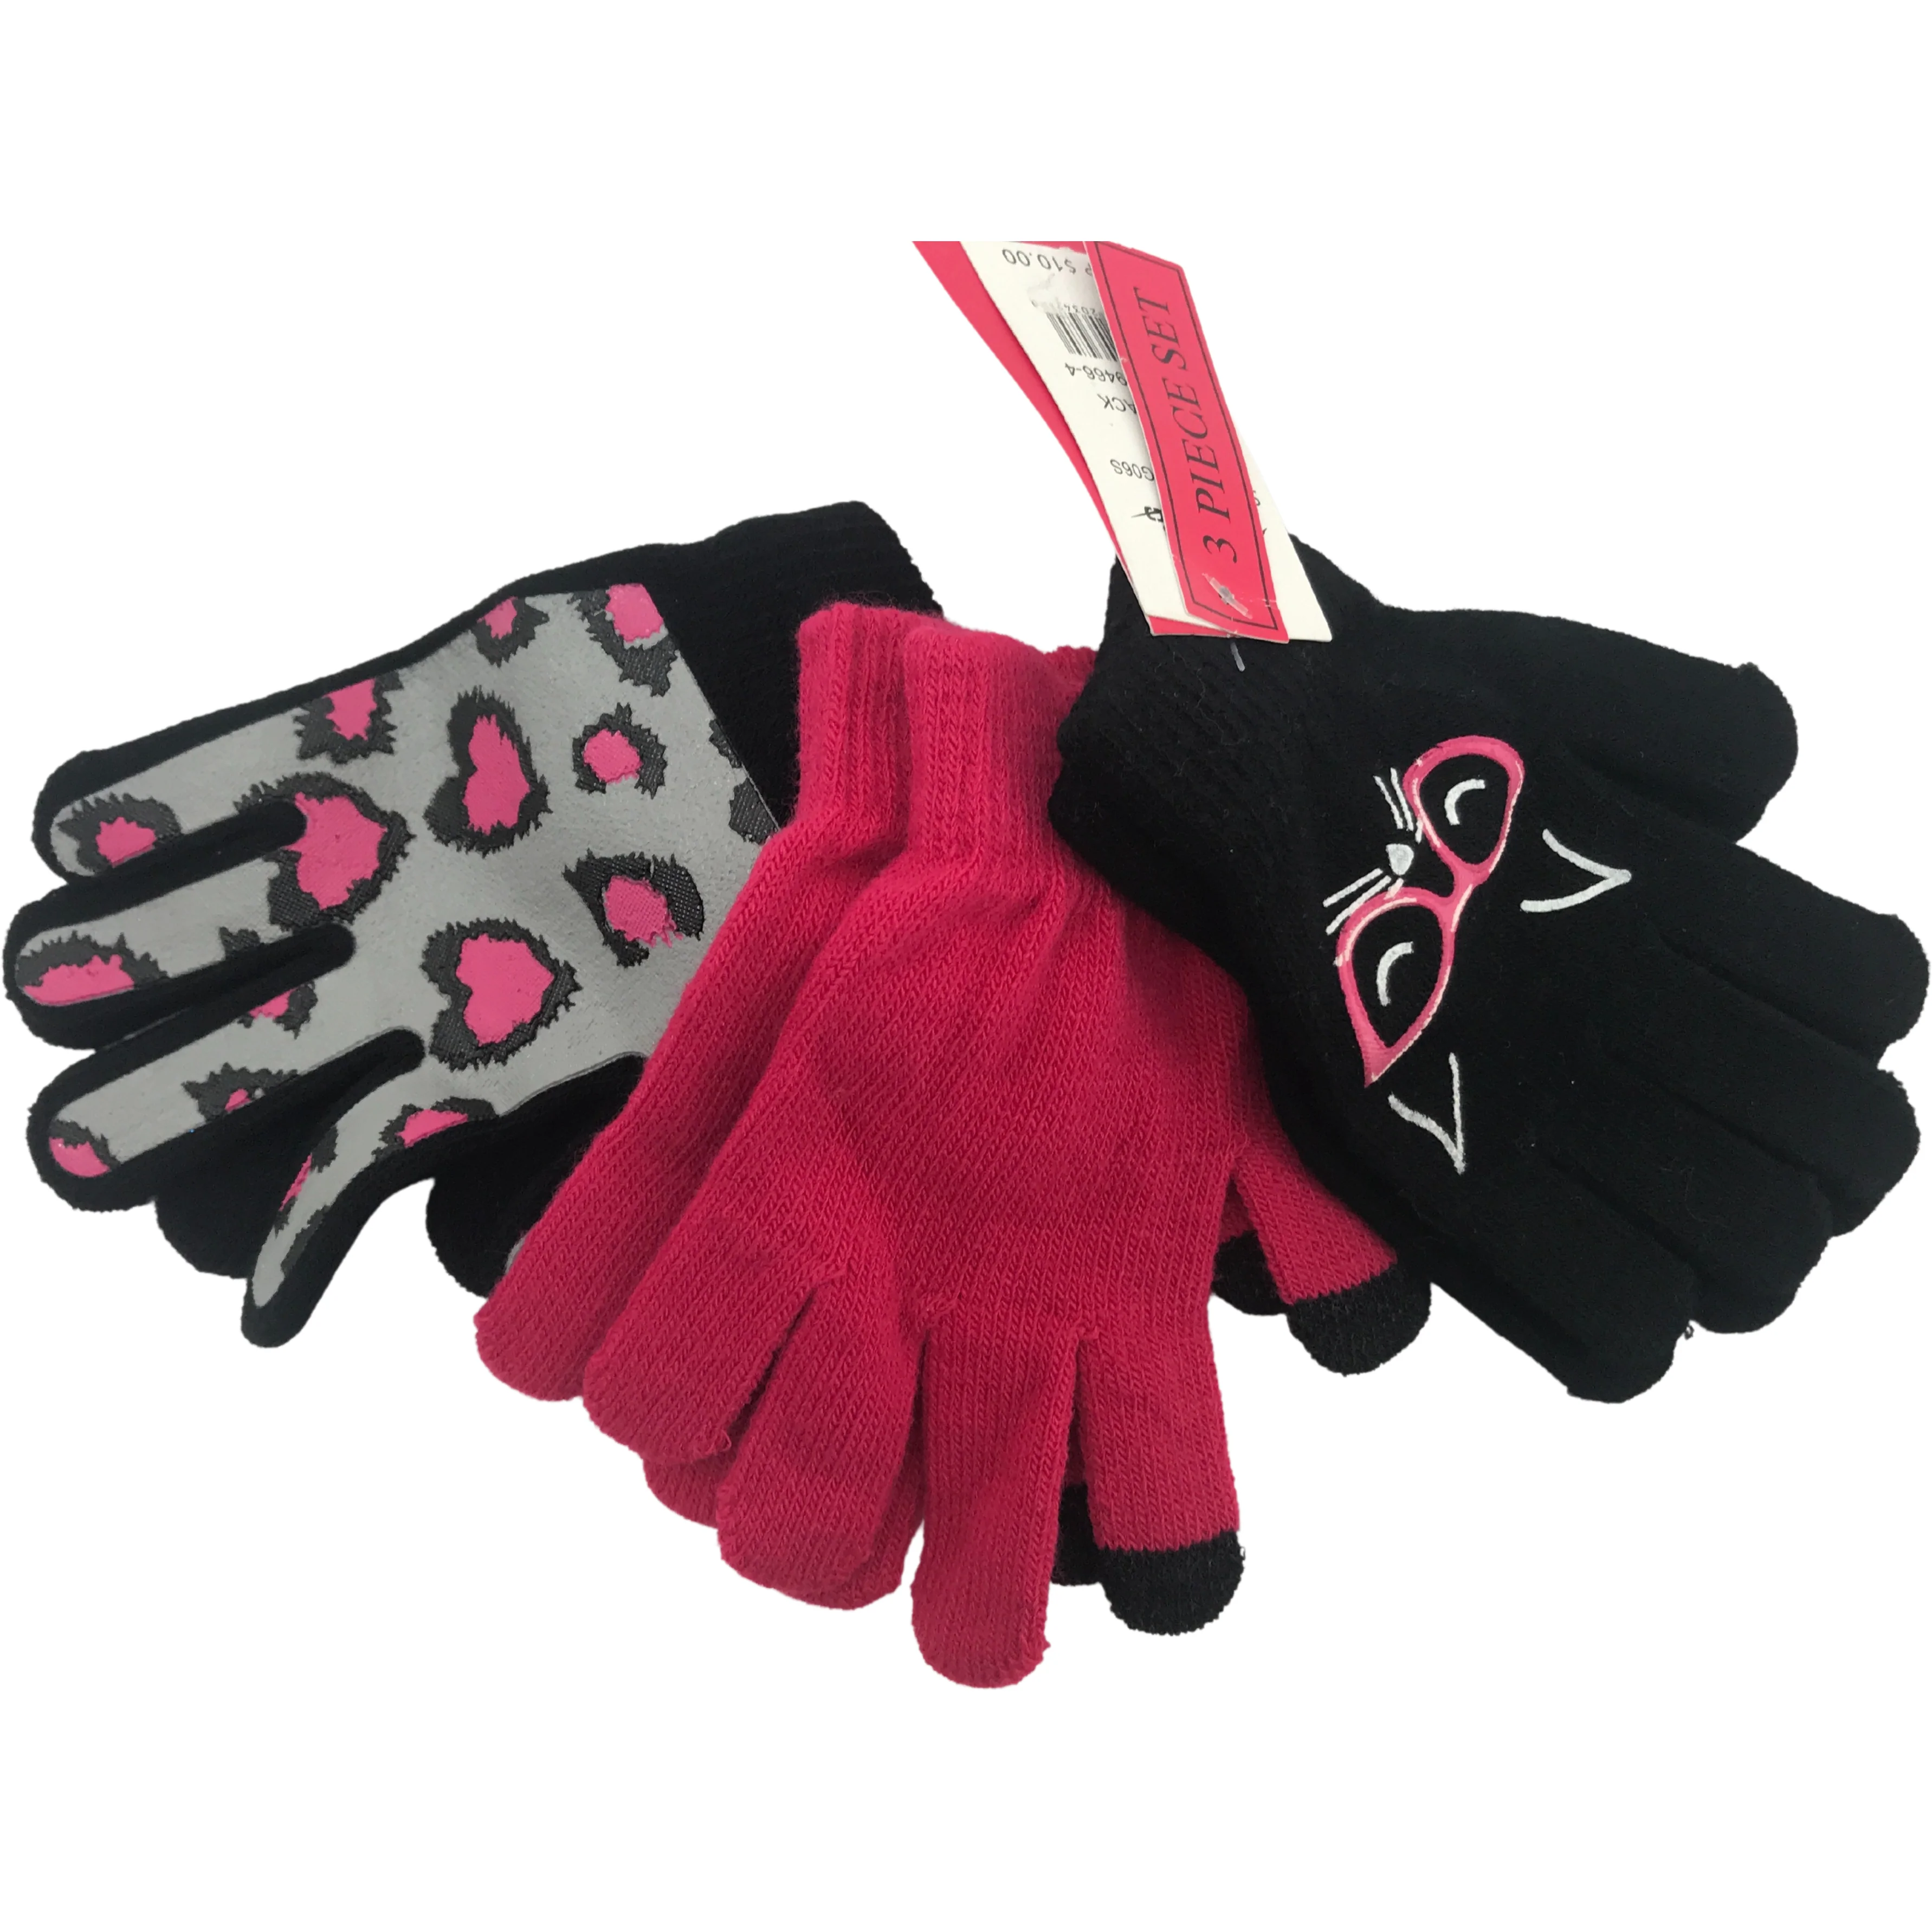 Minus Zero Children's Winter Gloves / Girl's Winter Gloves / Lightweight Gloves / 3 Pack